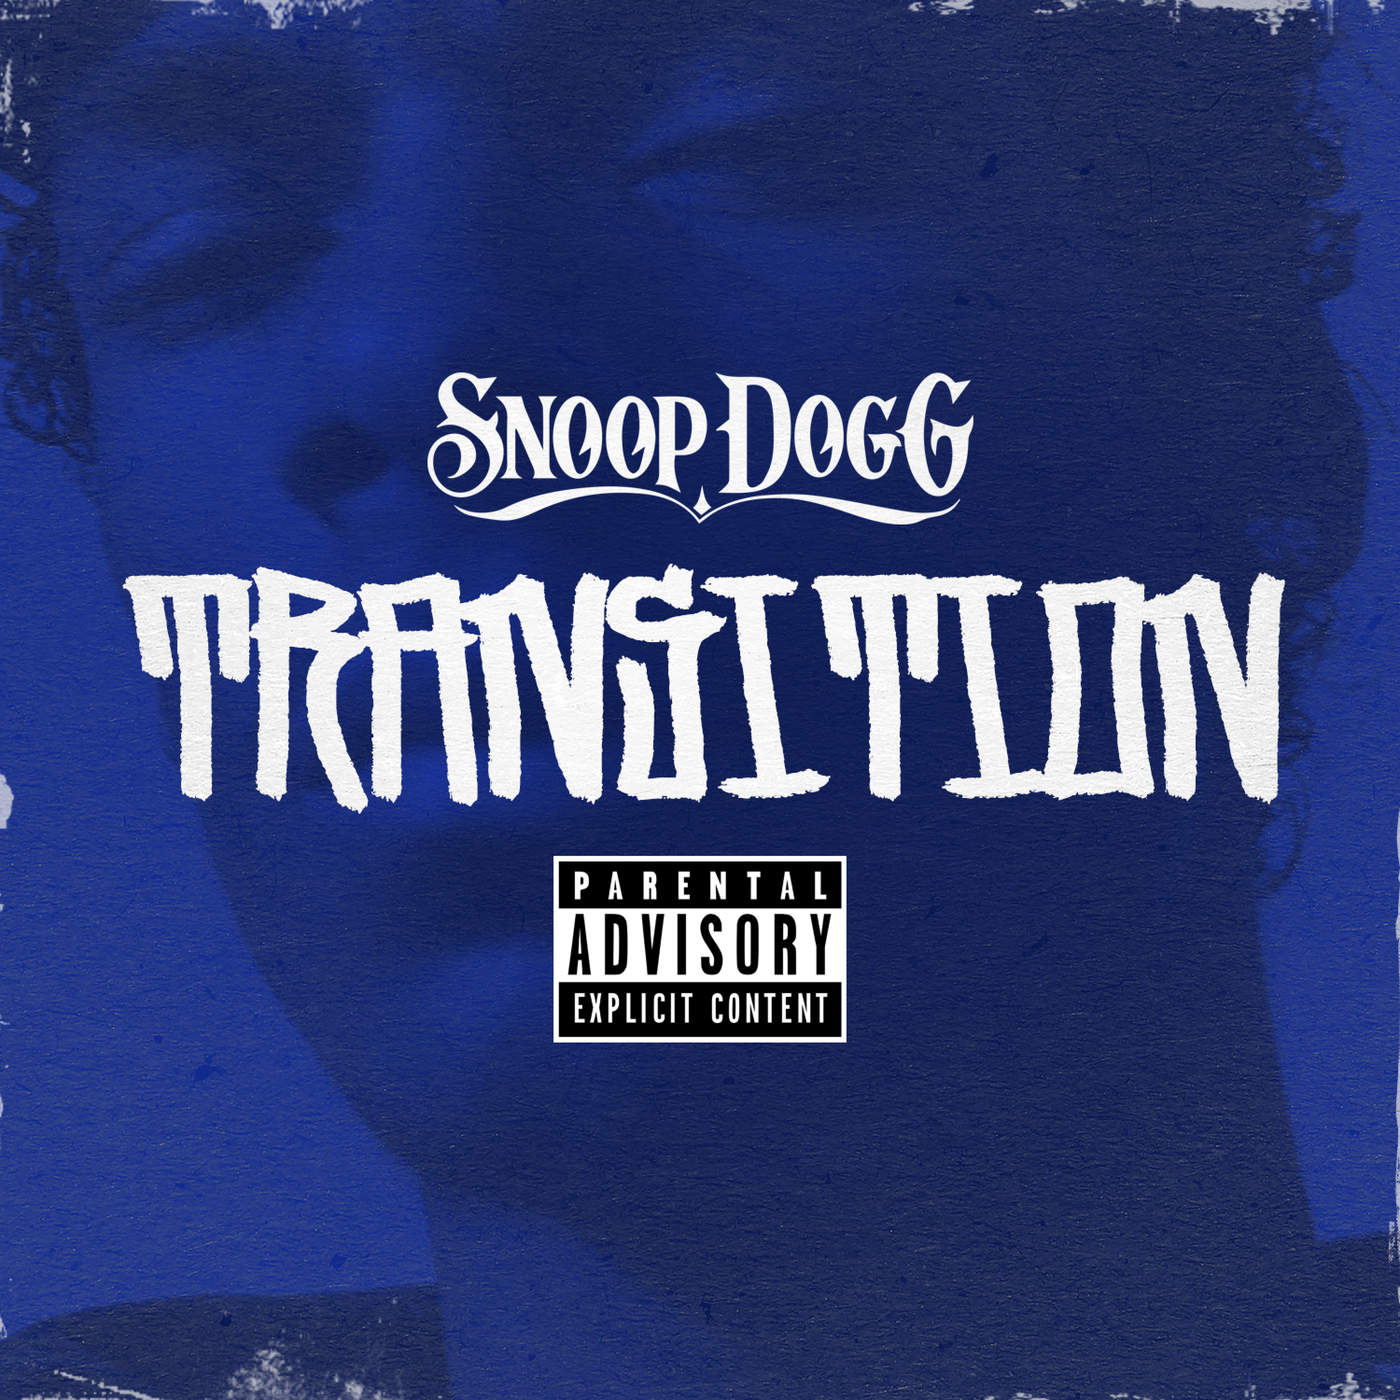 New Music: Snoop Dogg – “Transition” [LISTEN]